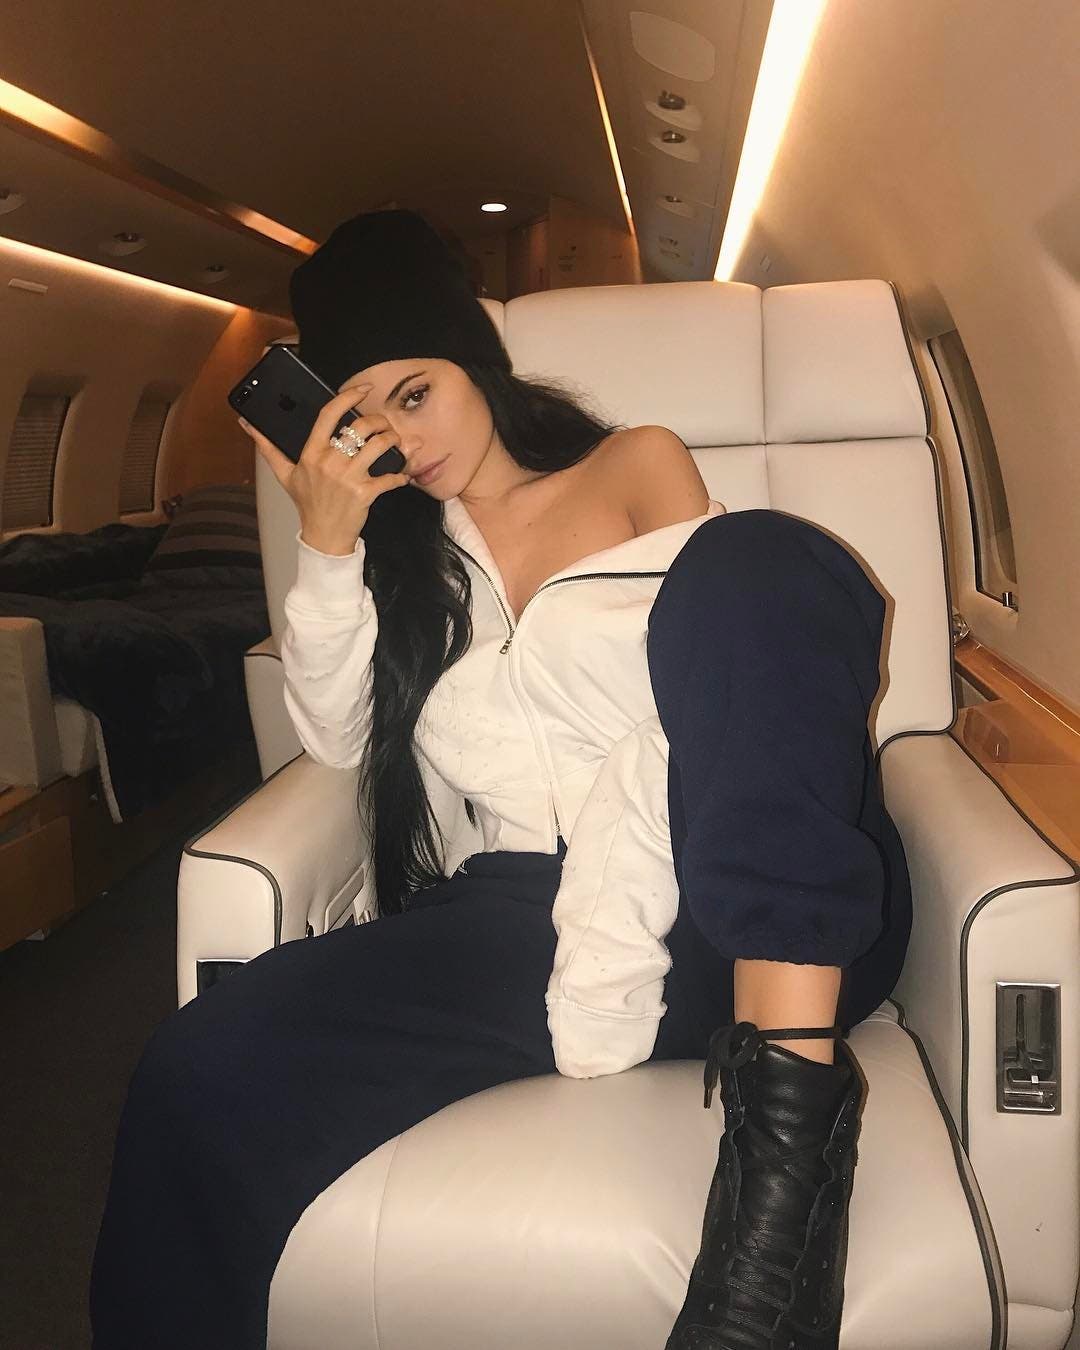 Acusan a Kylie Jenner de “criminal climática” por abusar de vuelos privados